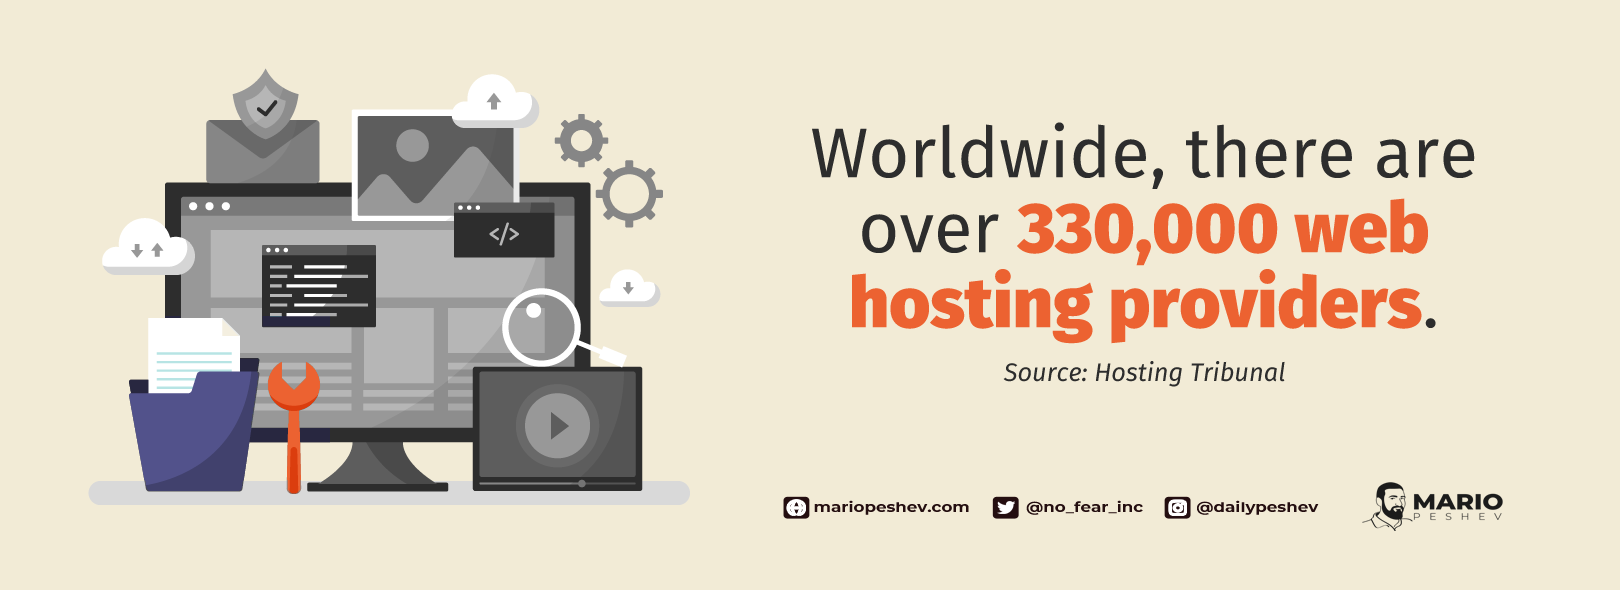 hosting providers